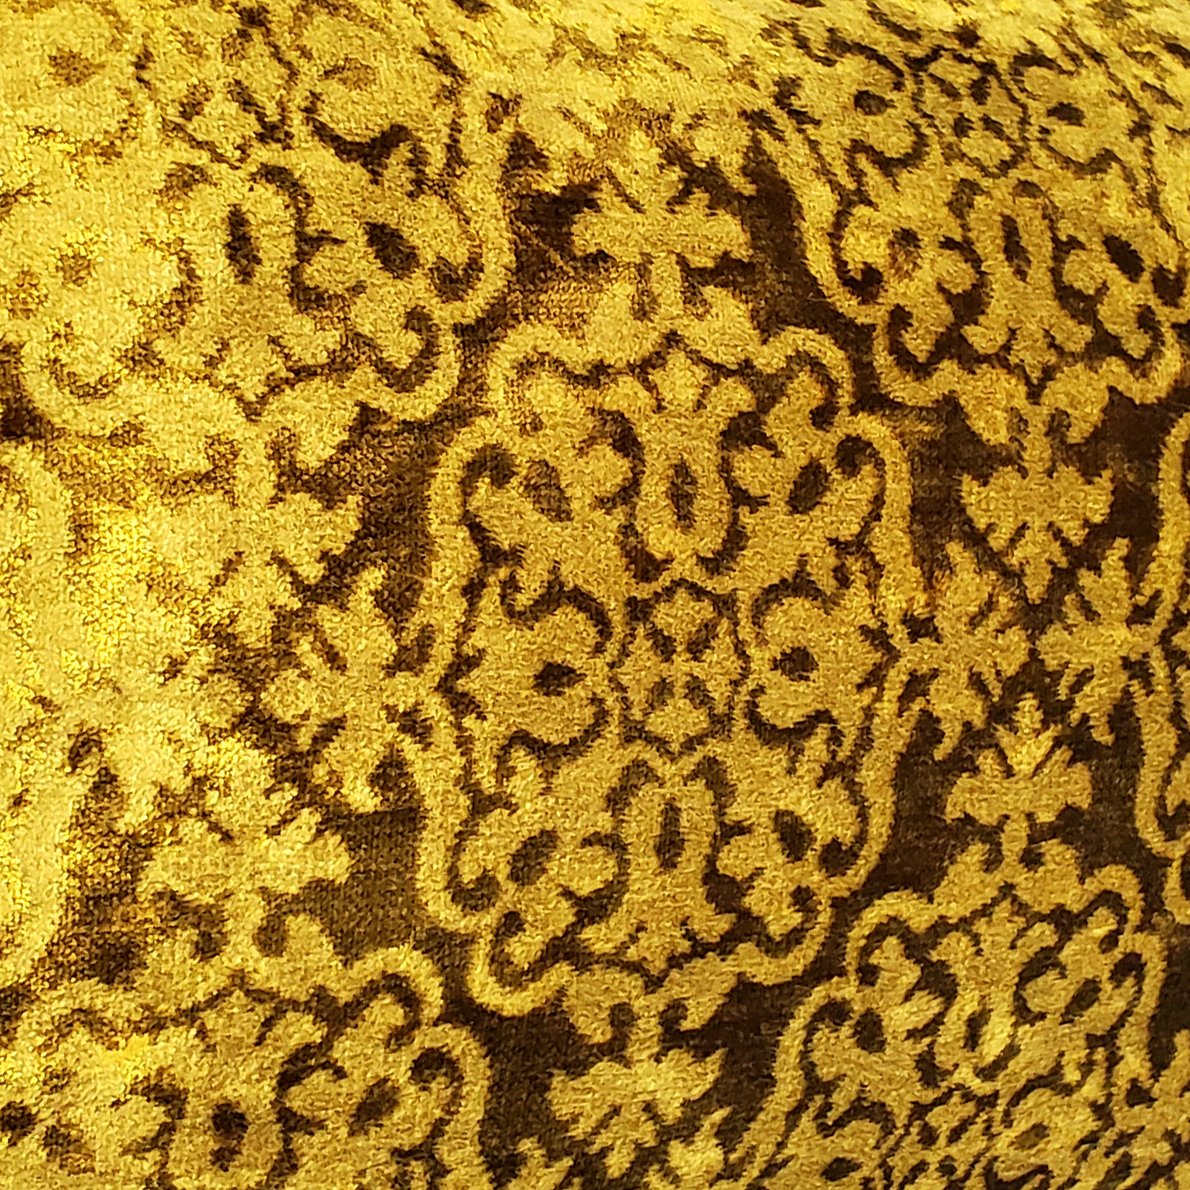 Artemis Gold Velvet Throw Pillow 20x20, With Polyfill Insert